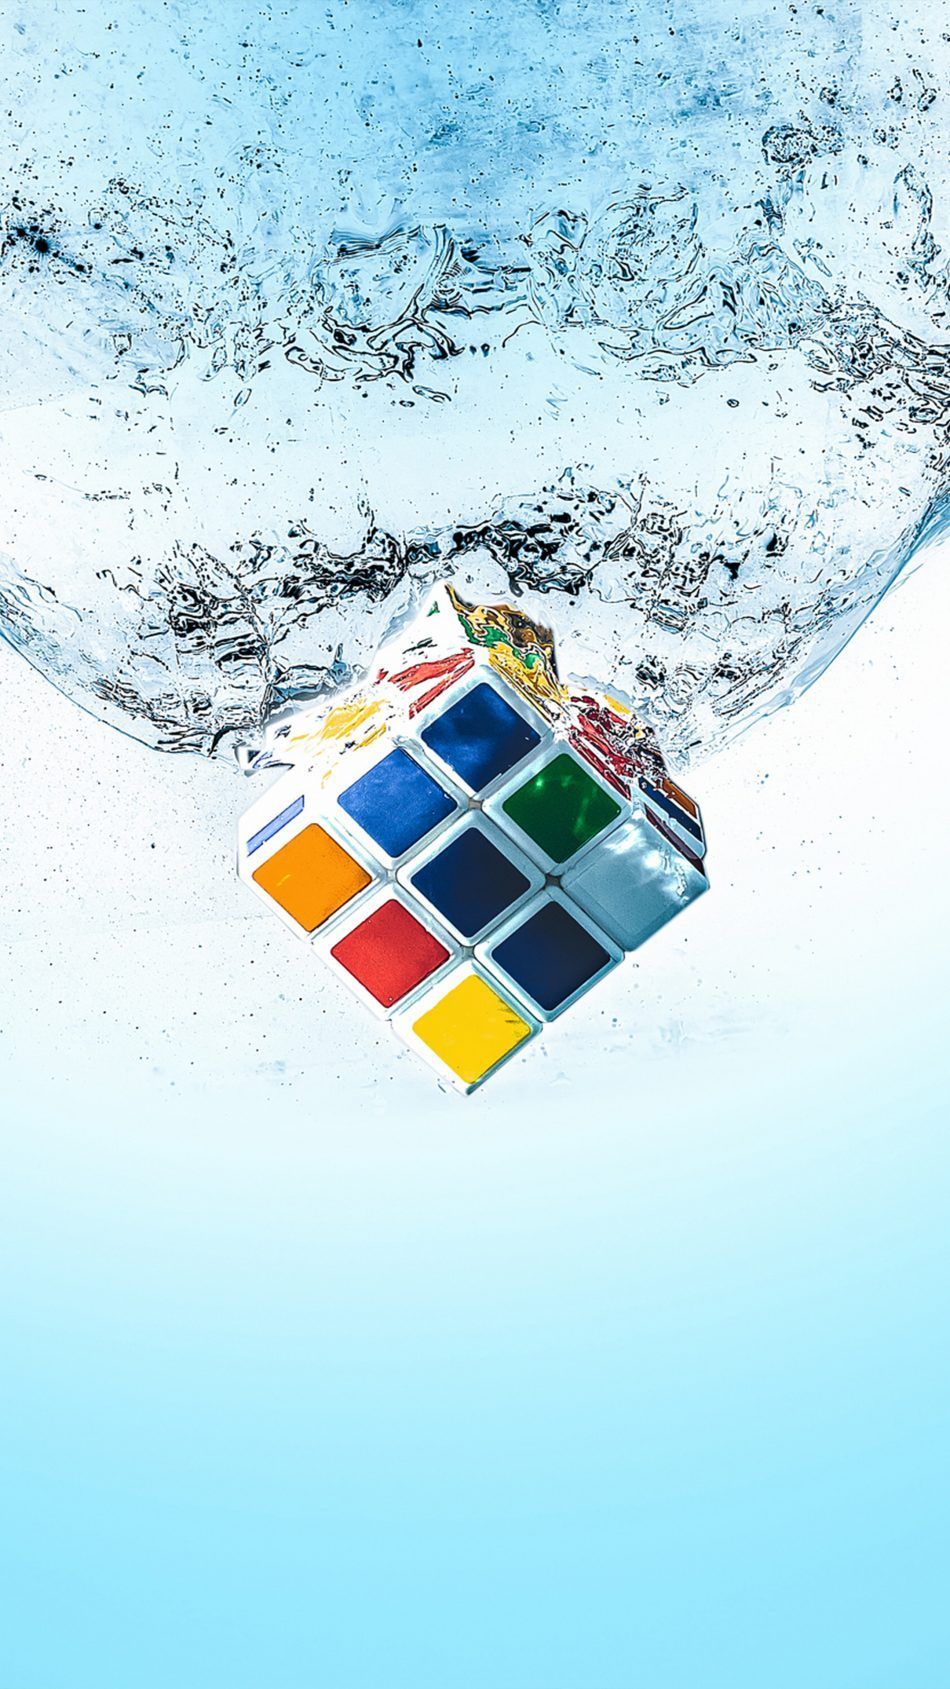 Rubik's Cube Splash Water Free 4K Ultra HD Mobile Wallpaper